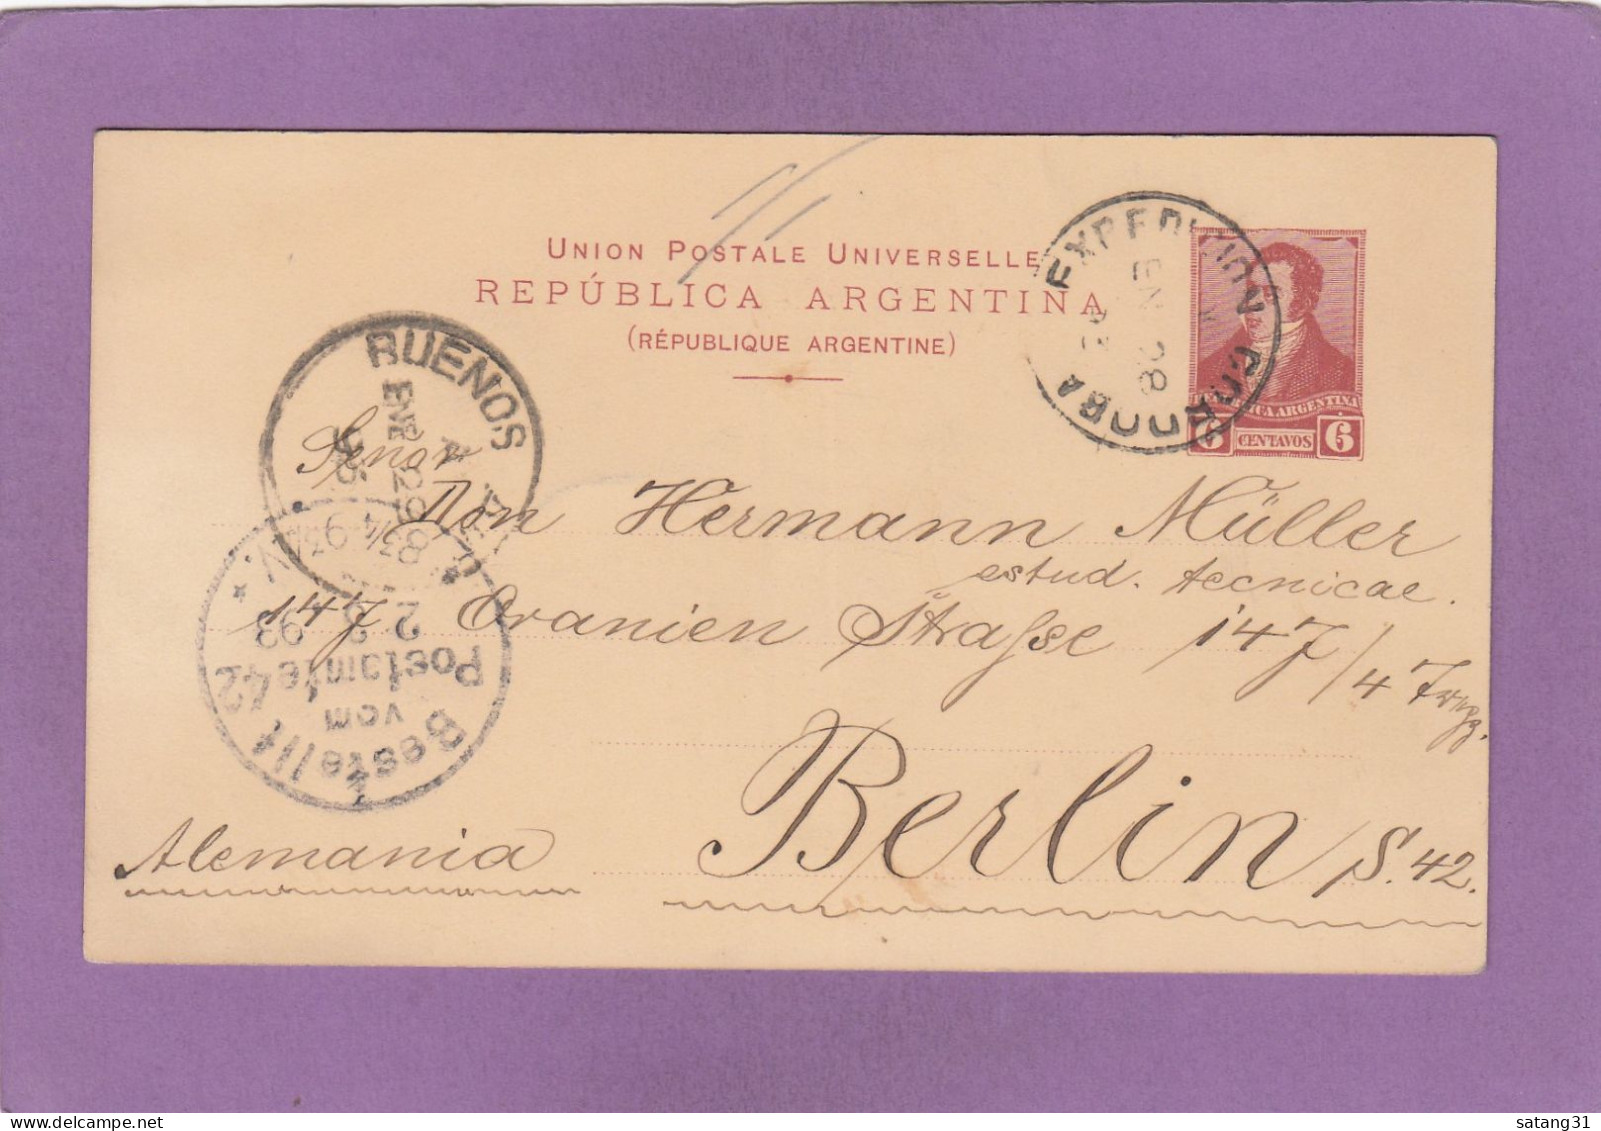 ENTIER POSTAL DE CORDOBA POUR BERLIN,VIA BUENOS AIRES,1893. - Interi Postali